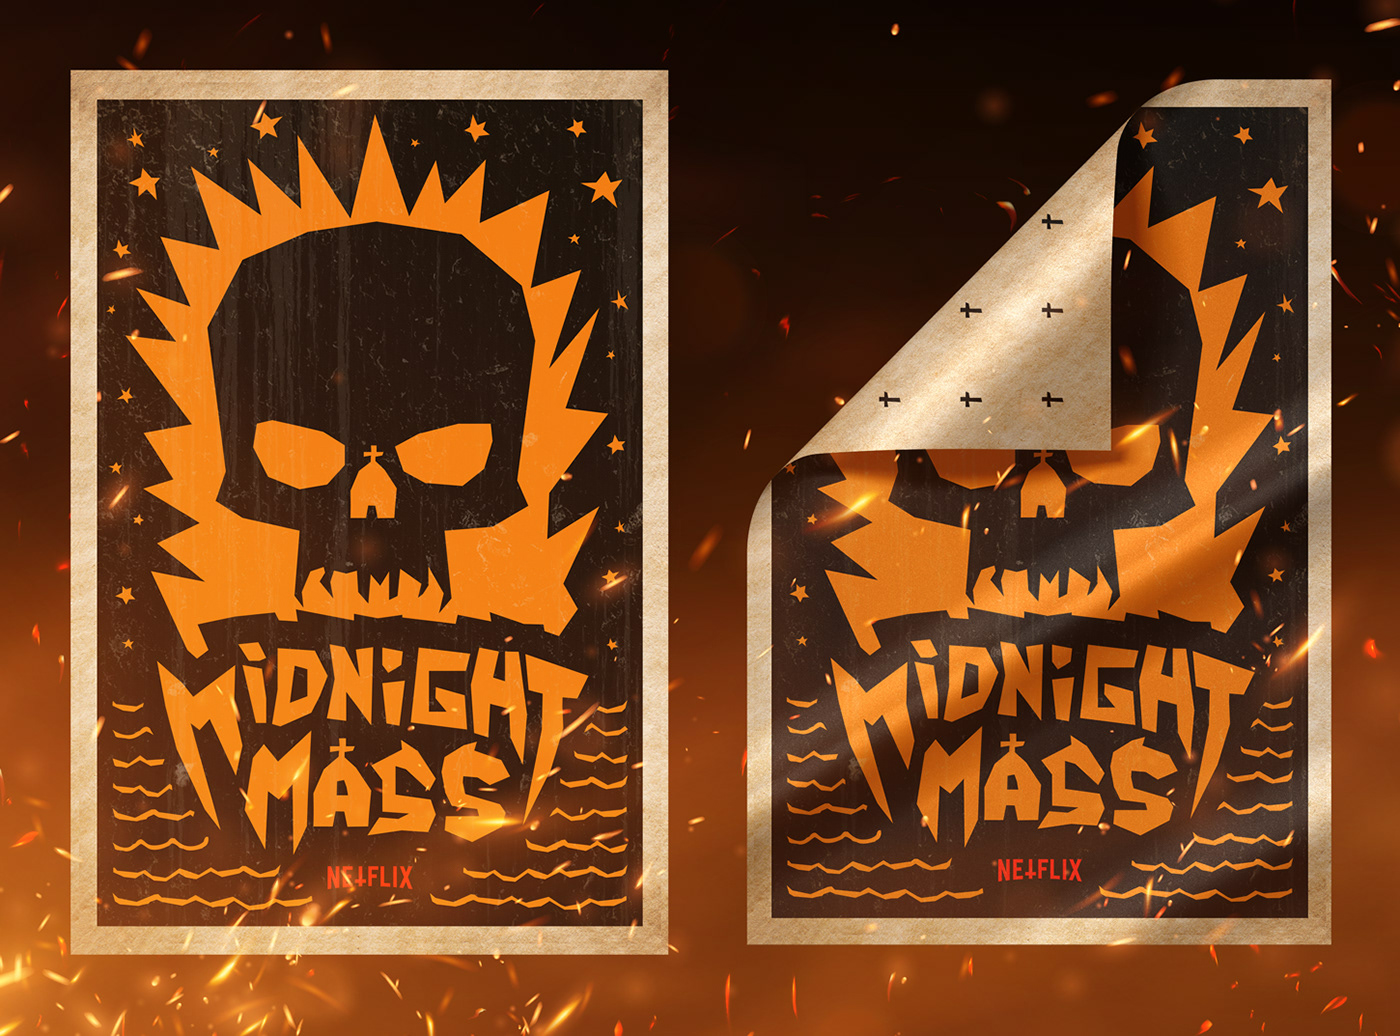 Poster design for the Netflix series, Midnight Mass.